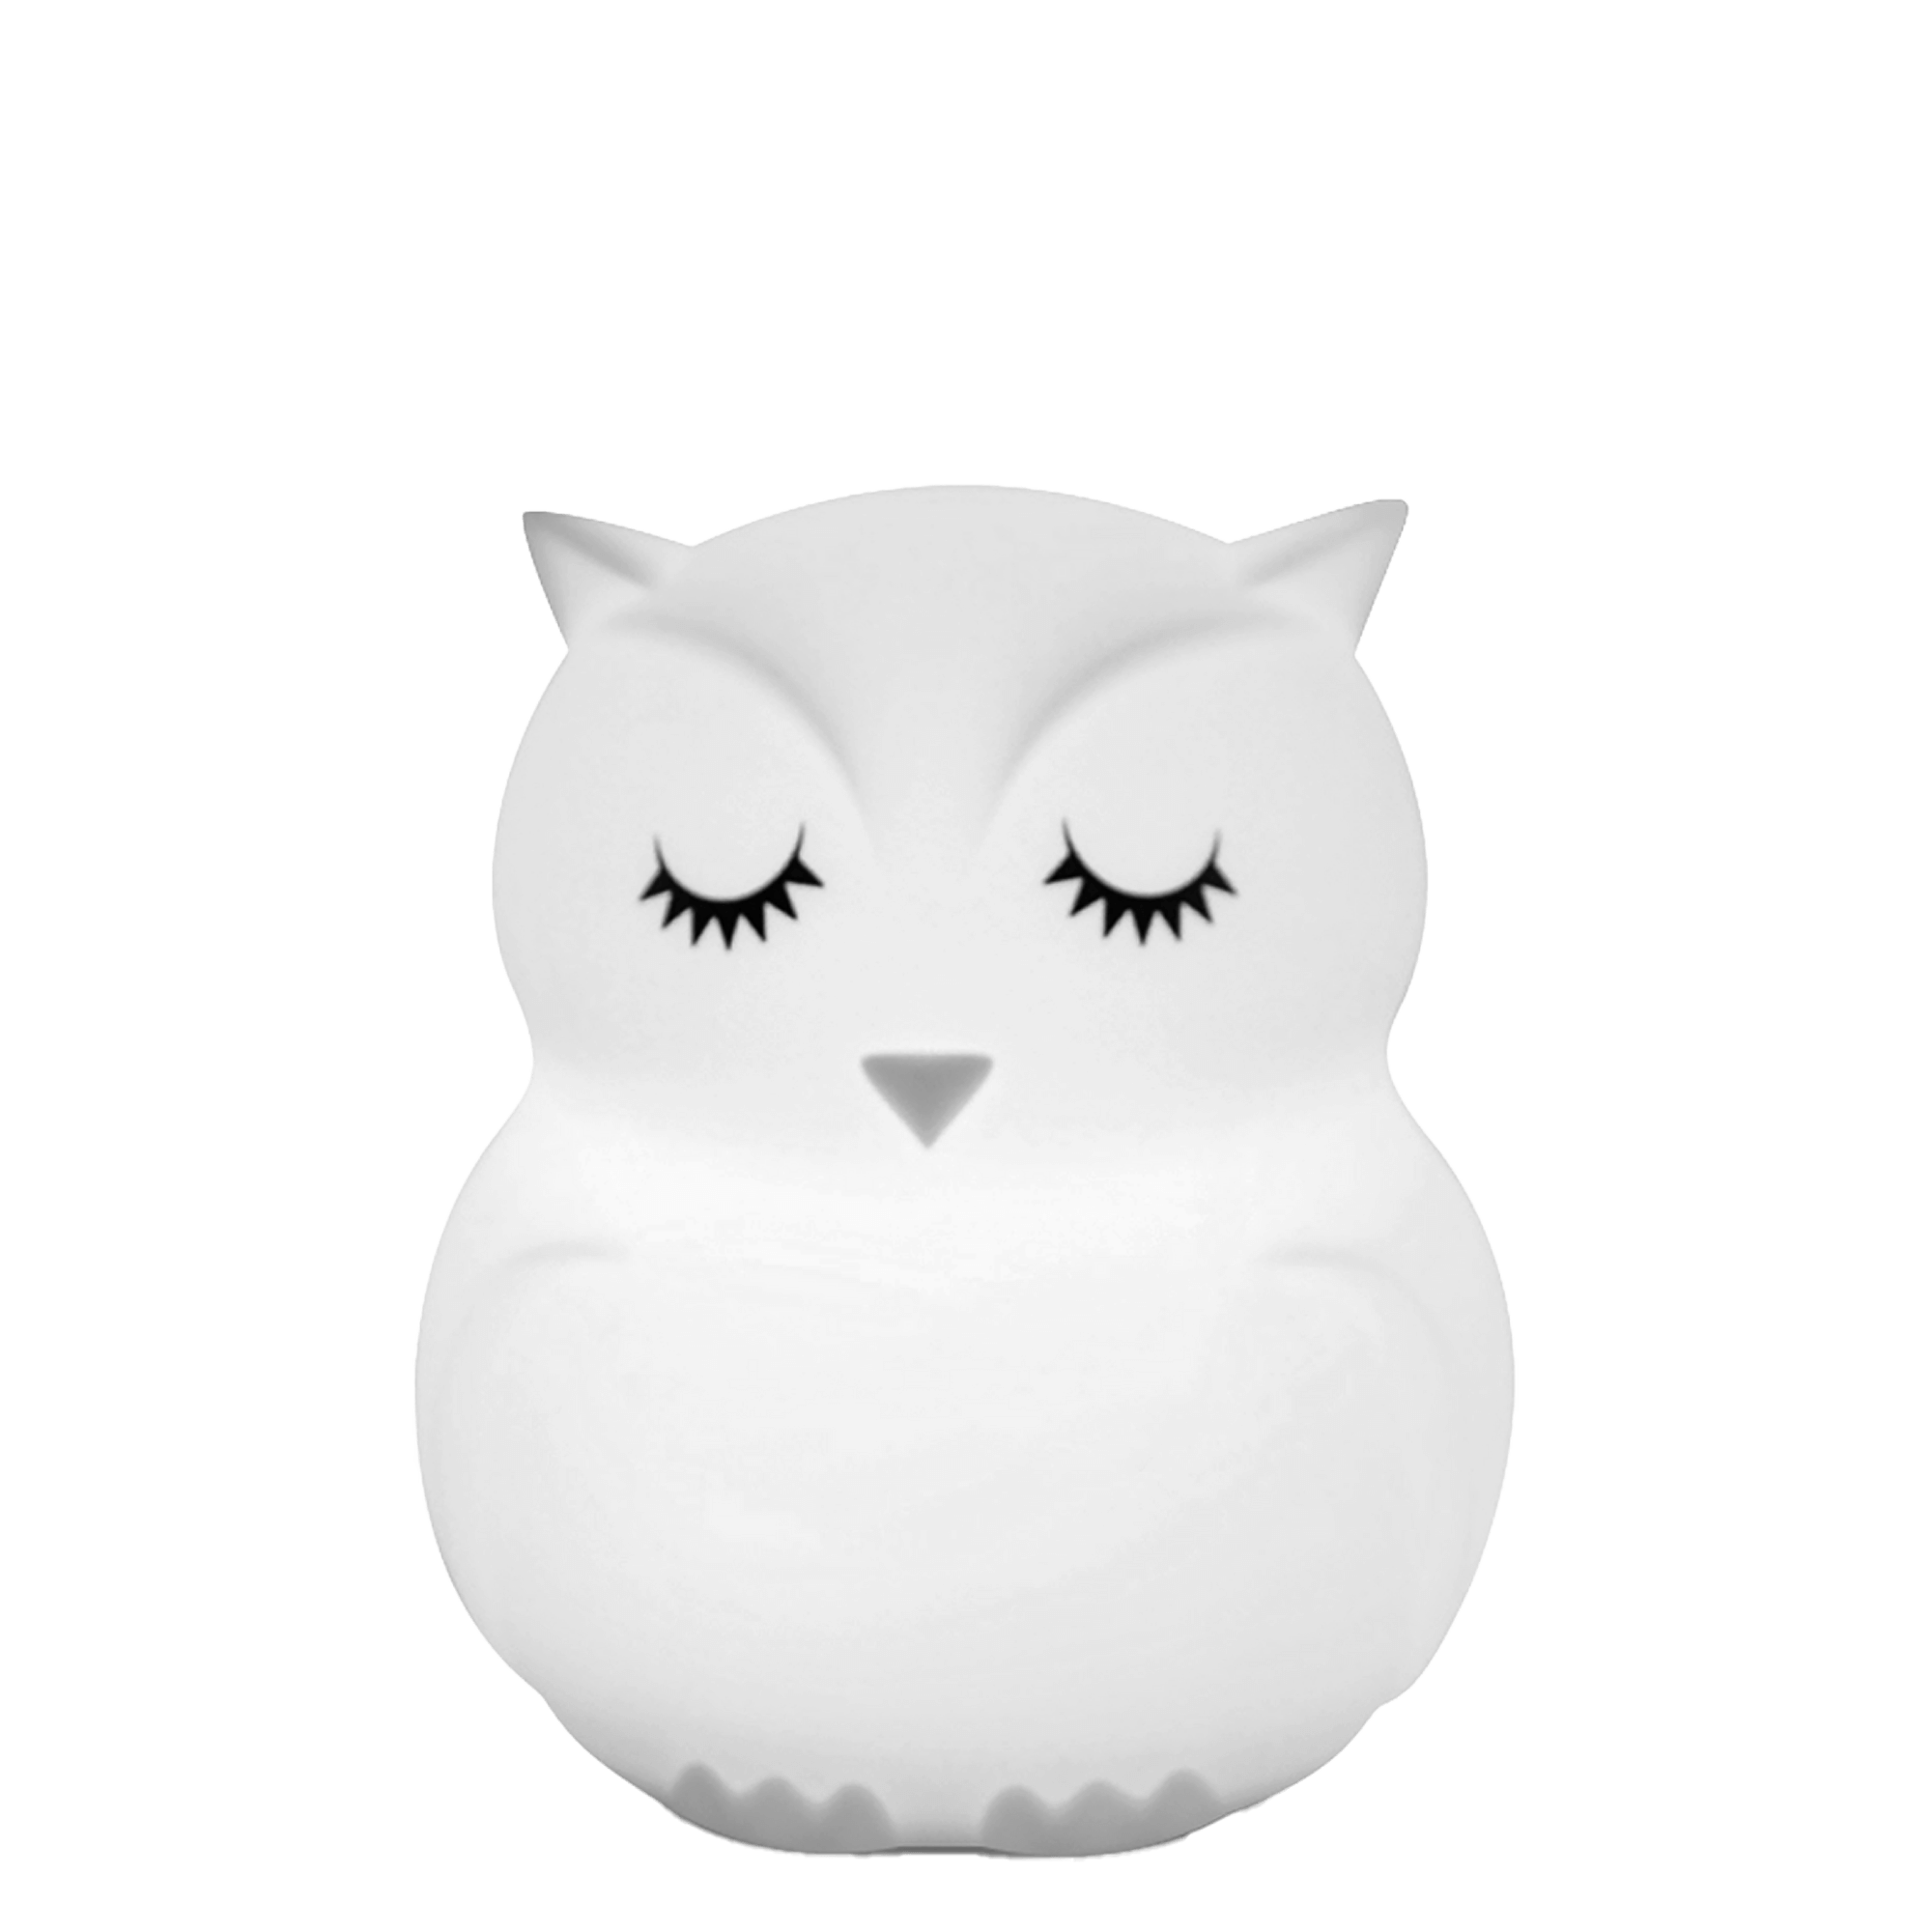 Mini Night Light Owl